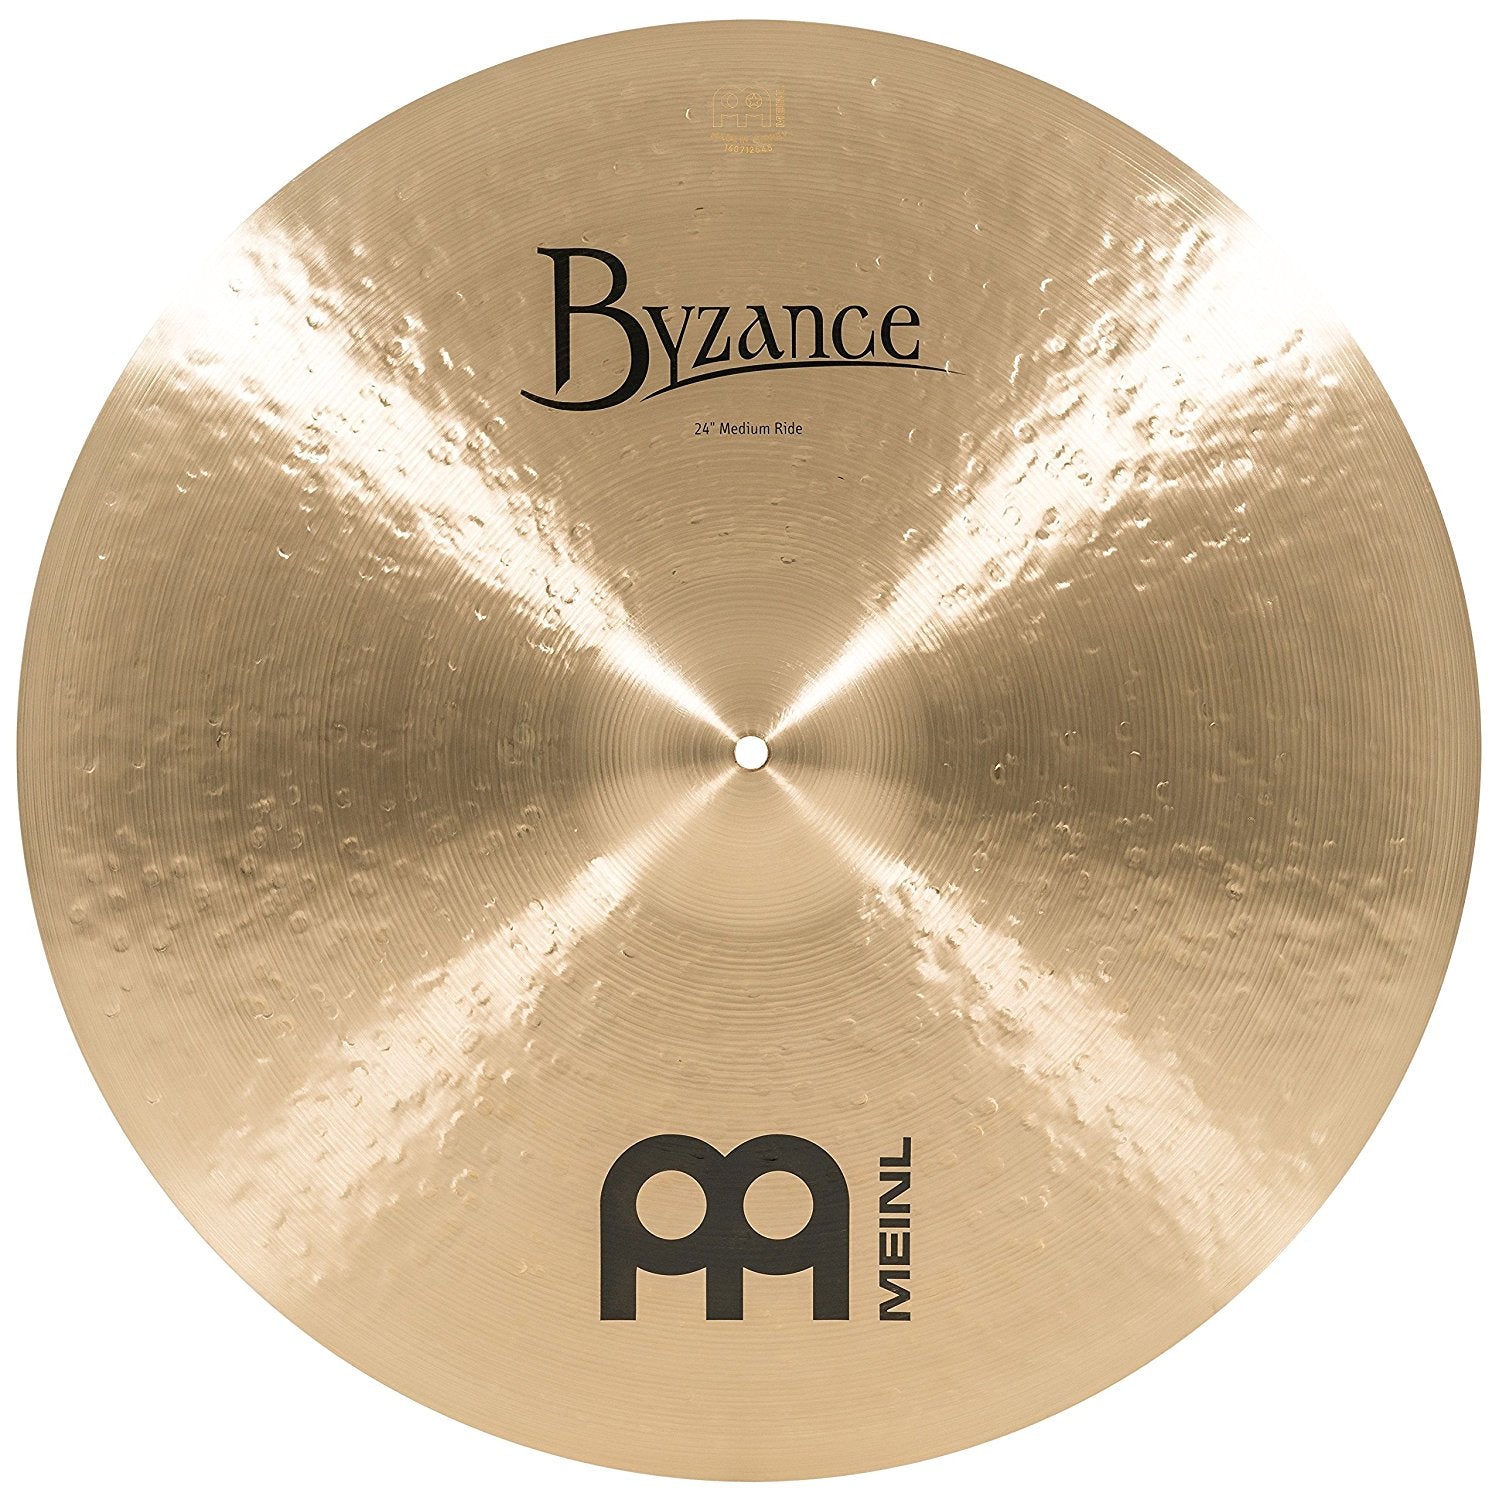 Byzance Medium Ride 24" Cymbal